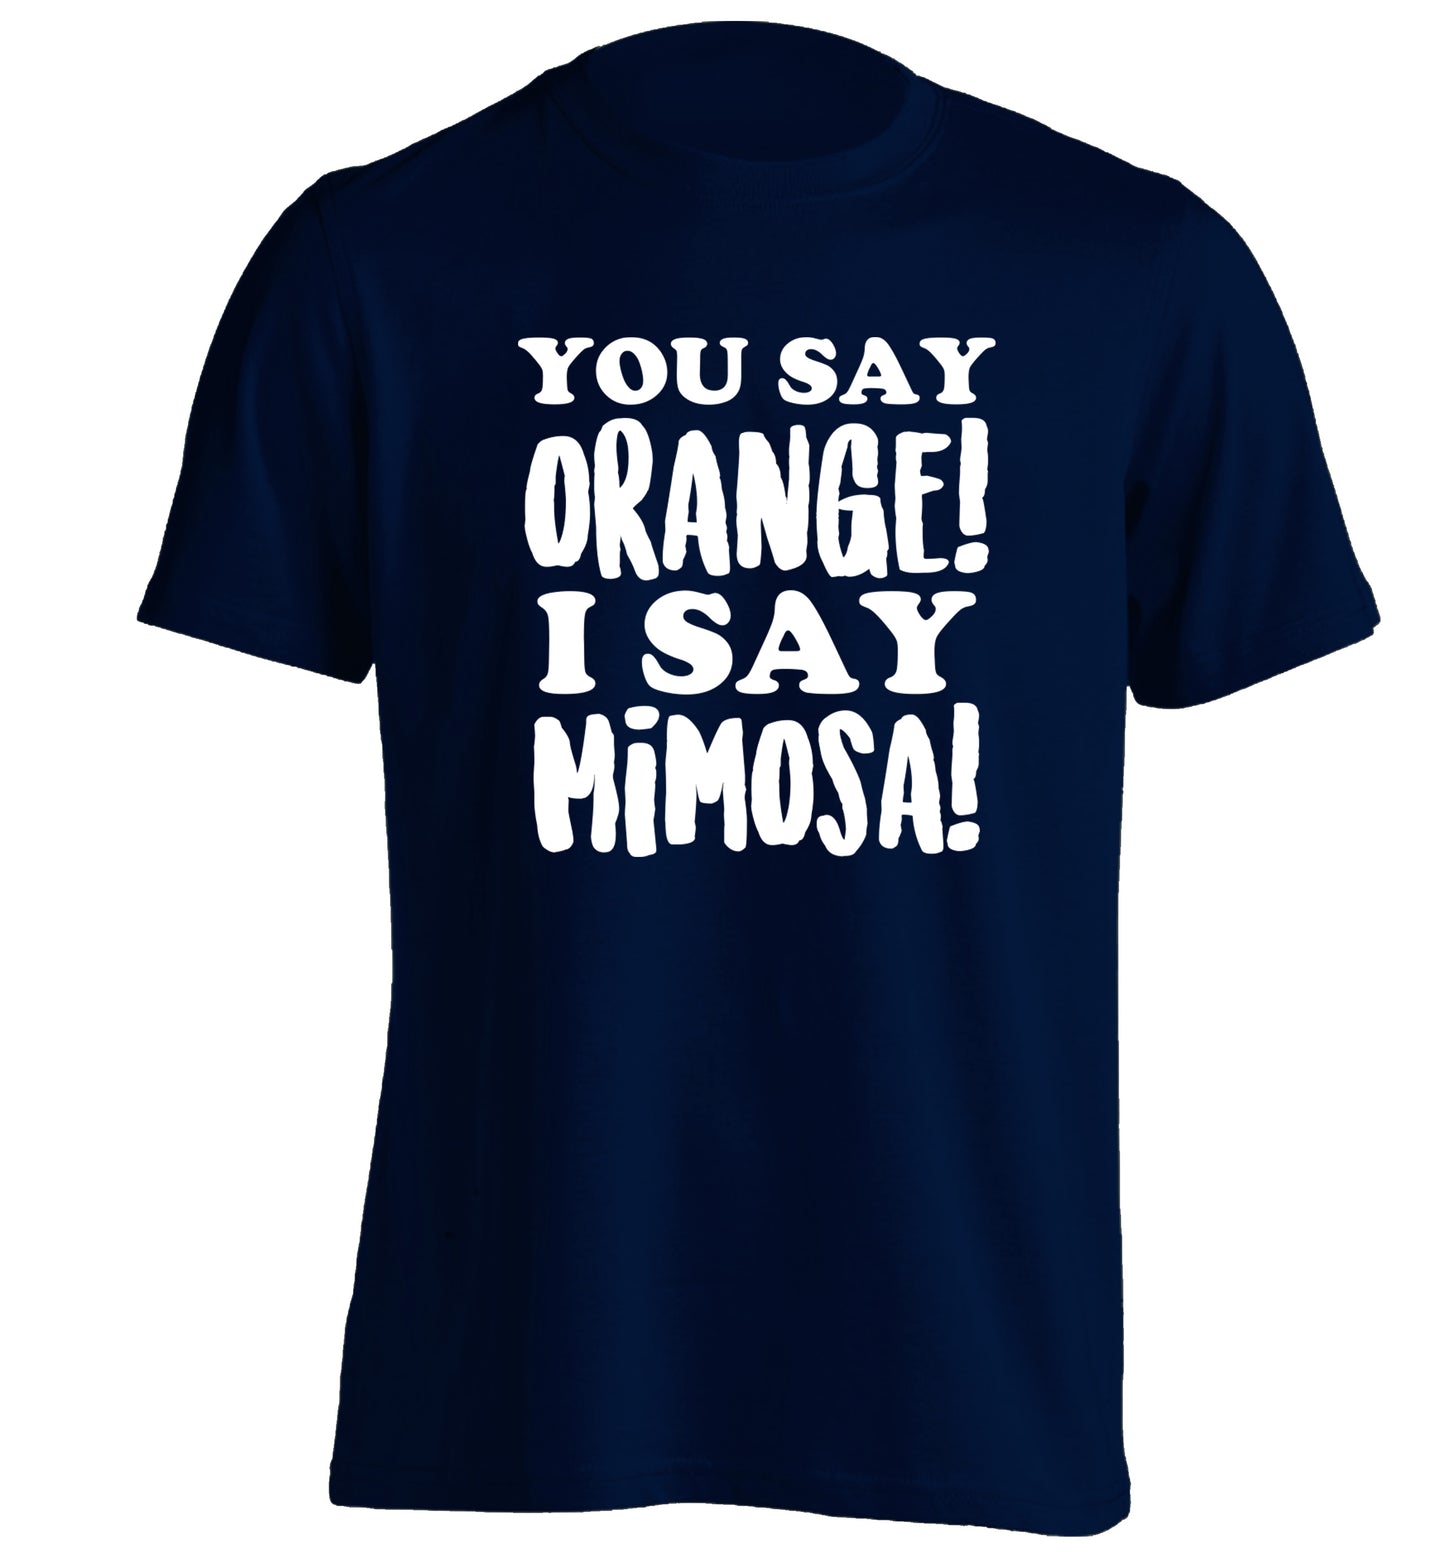 You say orange I say mimosa! adults unisex navy Tshirt 2XL